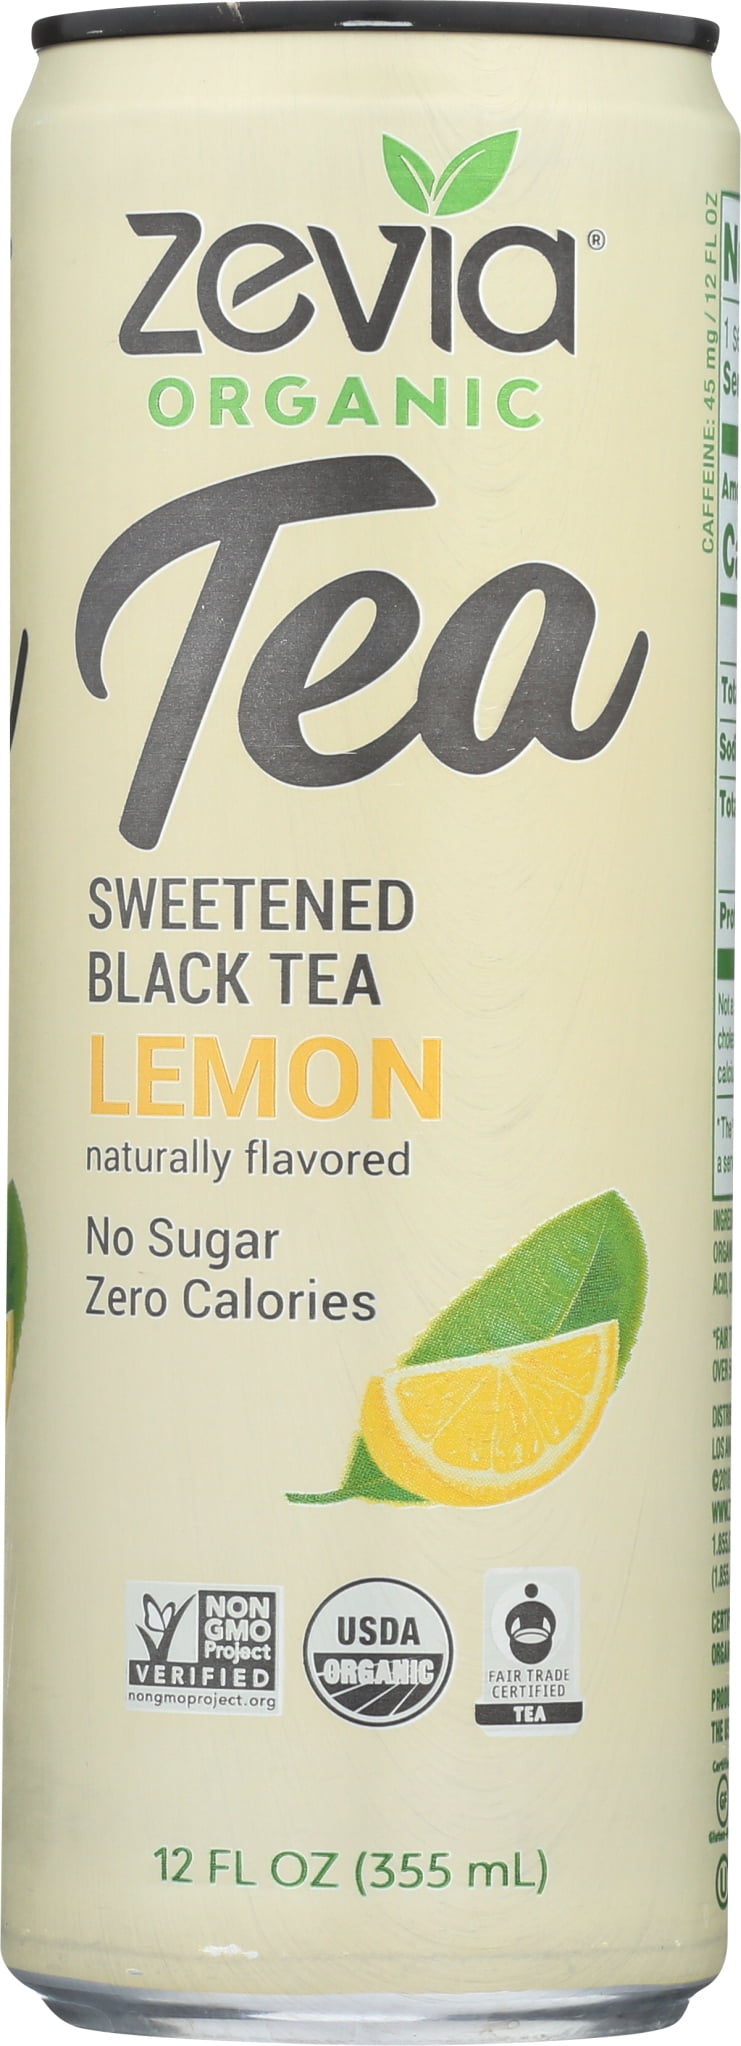 Zevia Black Tea Lemon 12 Fl Oz